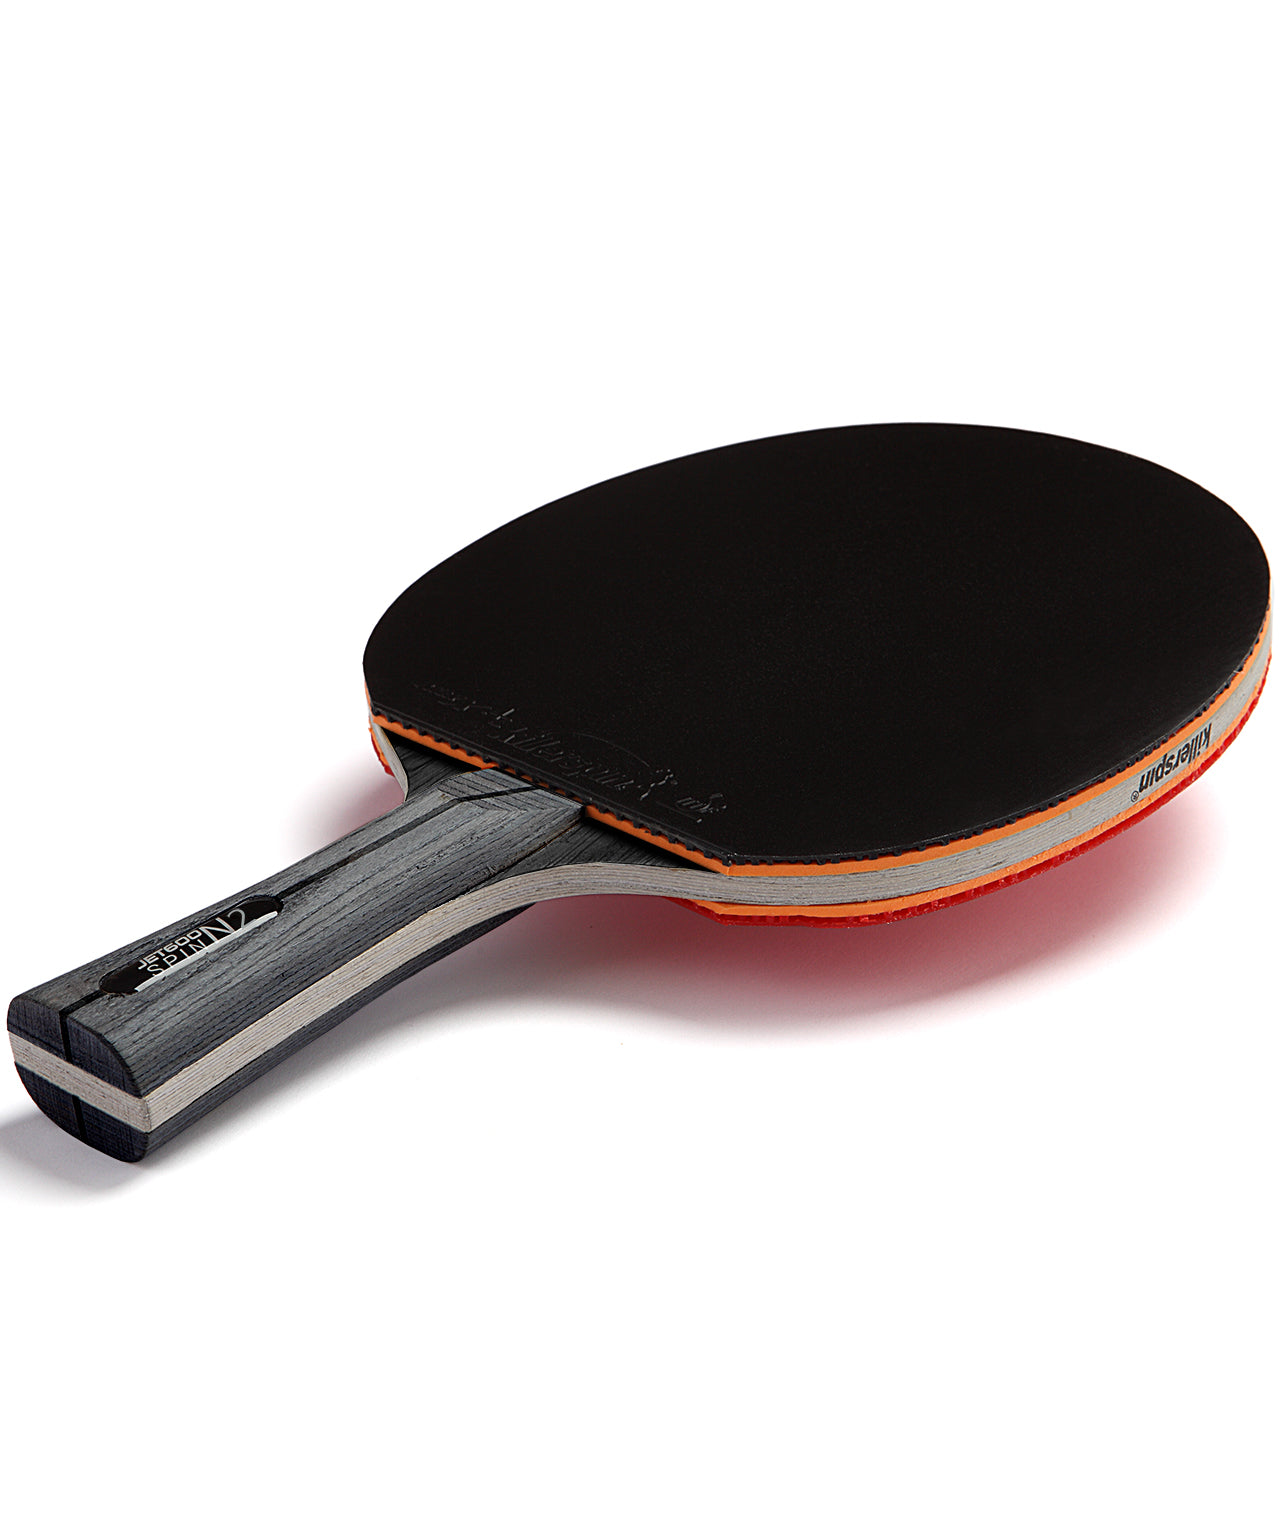 Killerspin Ping Pong Paddle Jet600 Spin N2 - Black Rubber